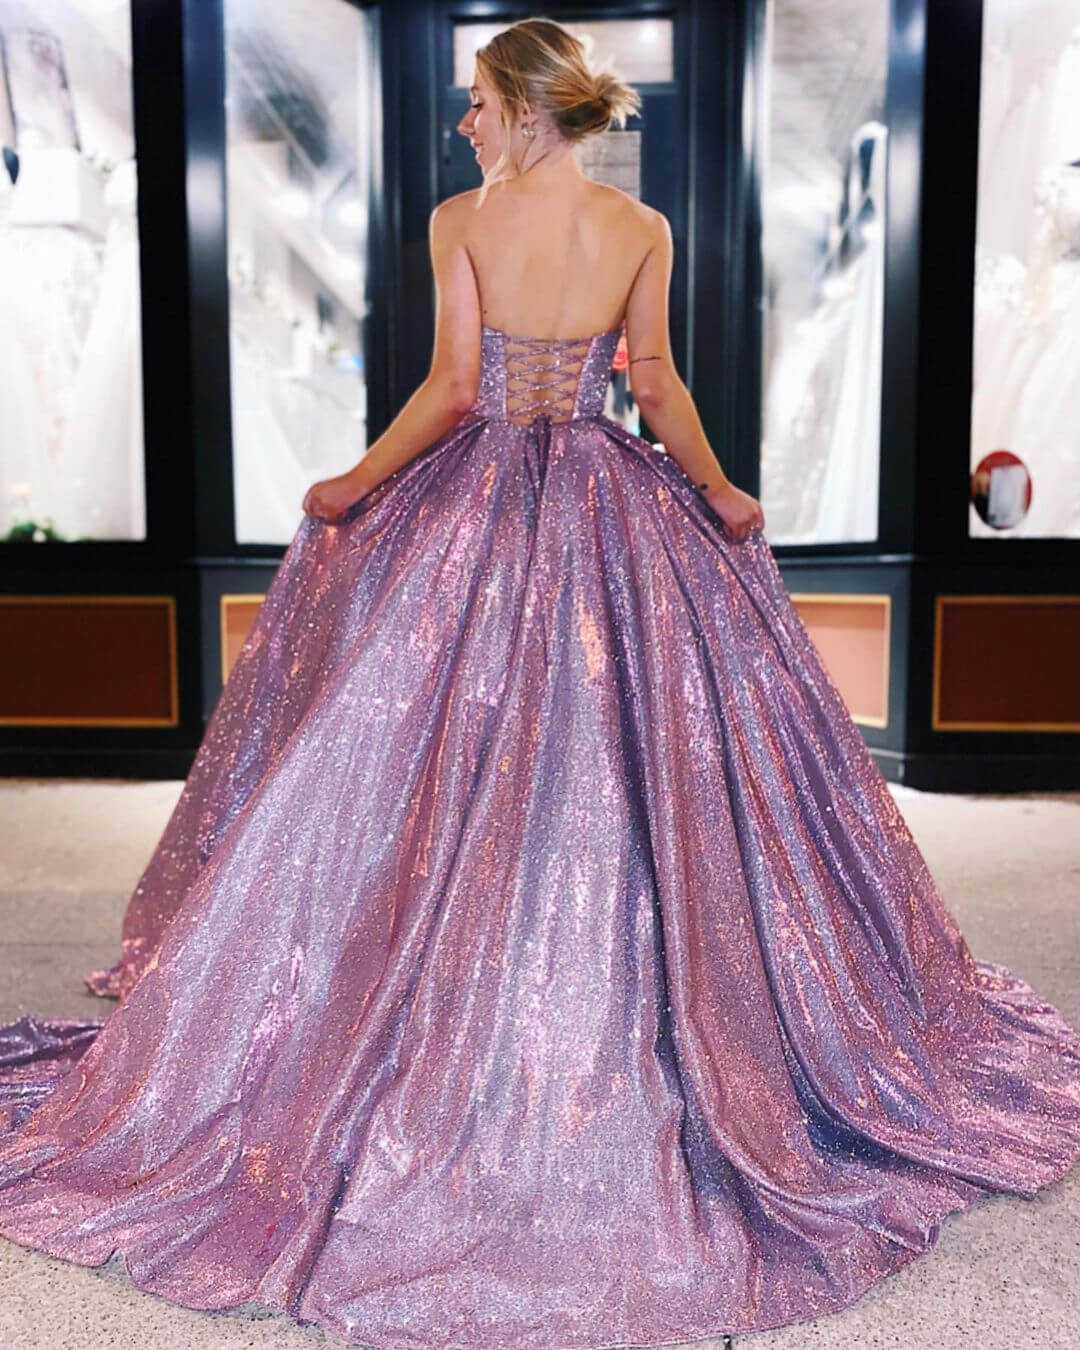 vigocouture-Lavender Sparkly Lace Strapless A-Line Prom Dress 20819-Prom Dresses-vigocouture-